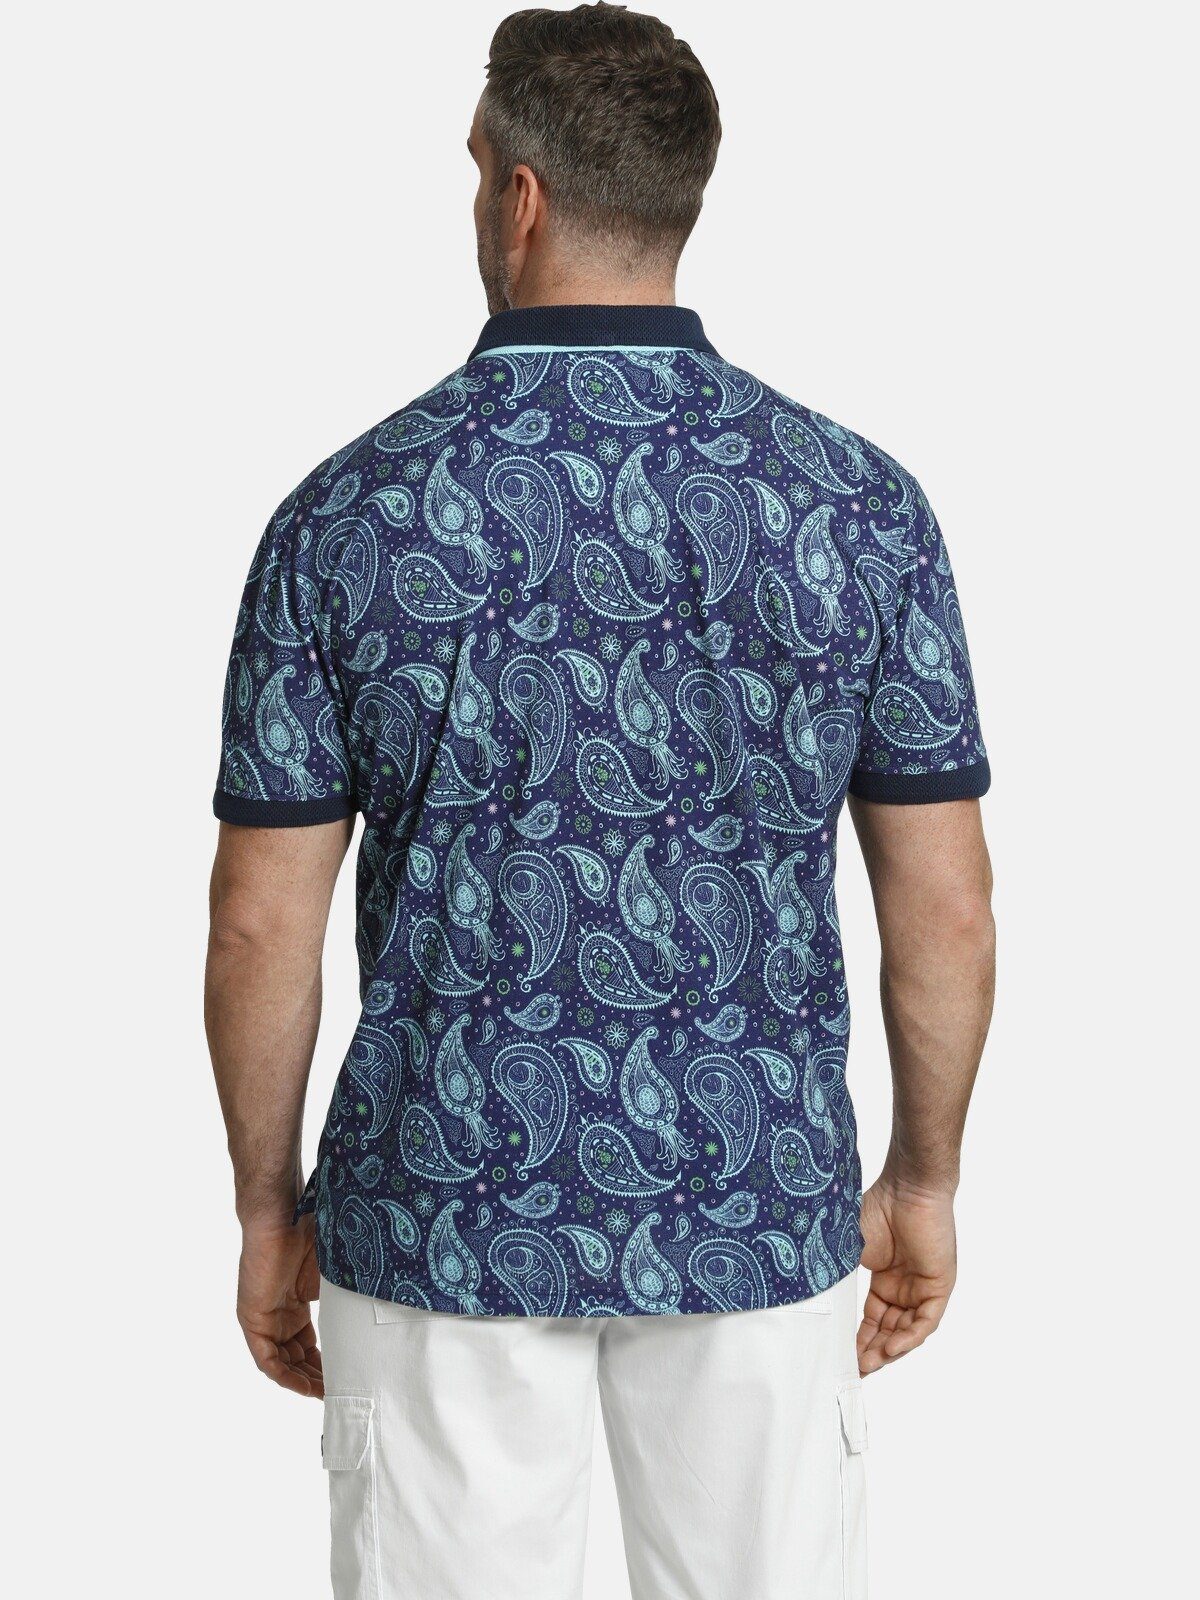 Muster, Comfort Charles Paisley EARL Fit Poloshirt SUITBERT blau Colby